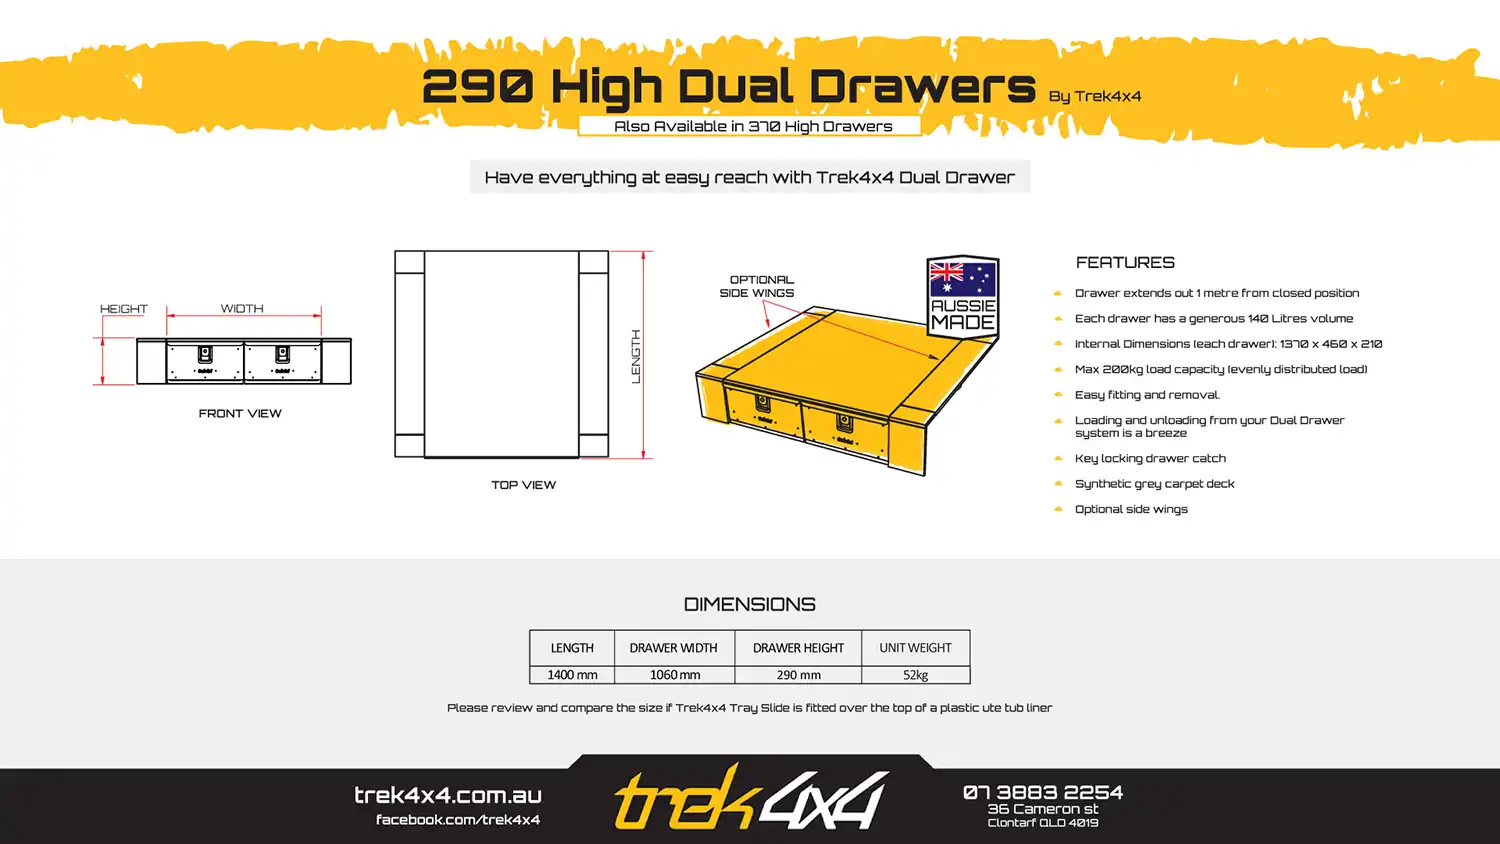 290mm High Dual Drawers by Trek 4x4